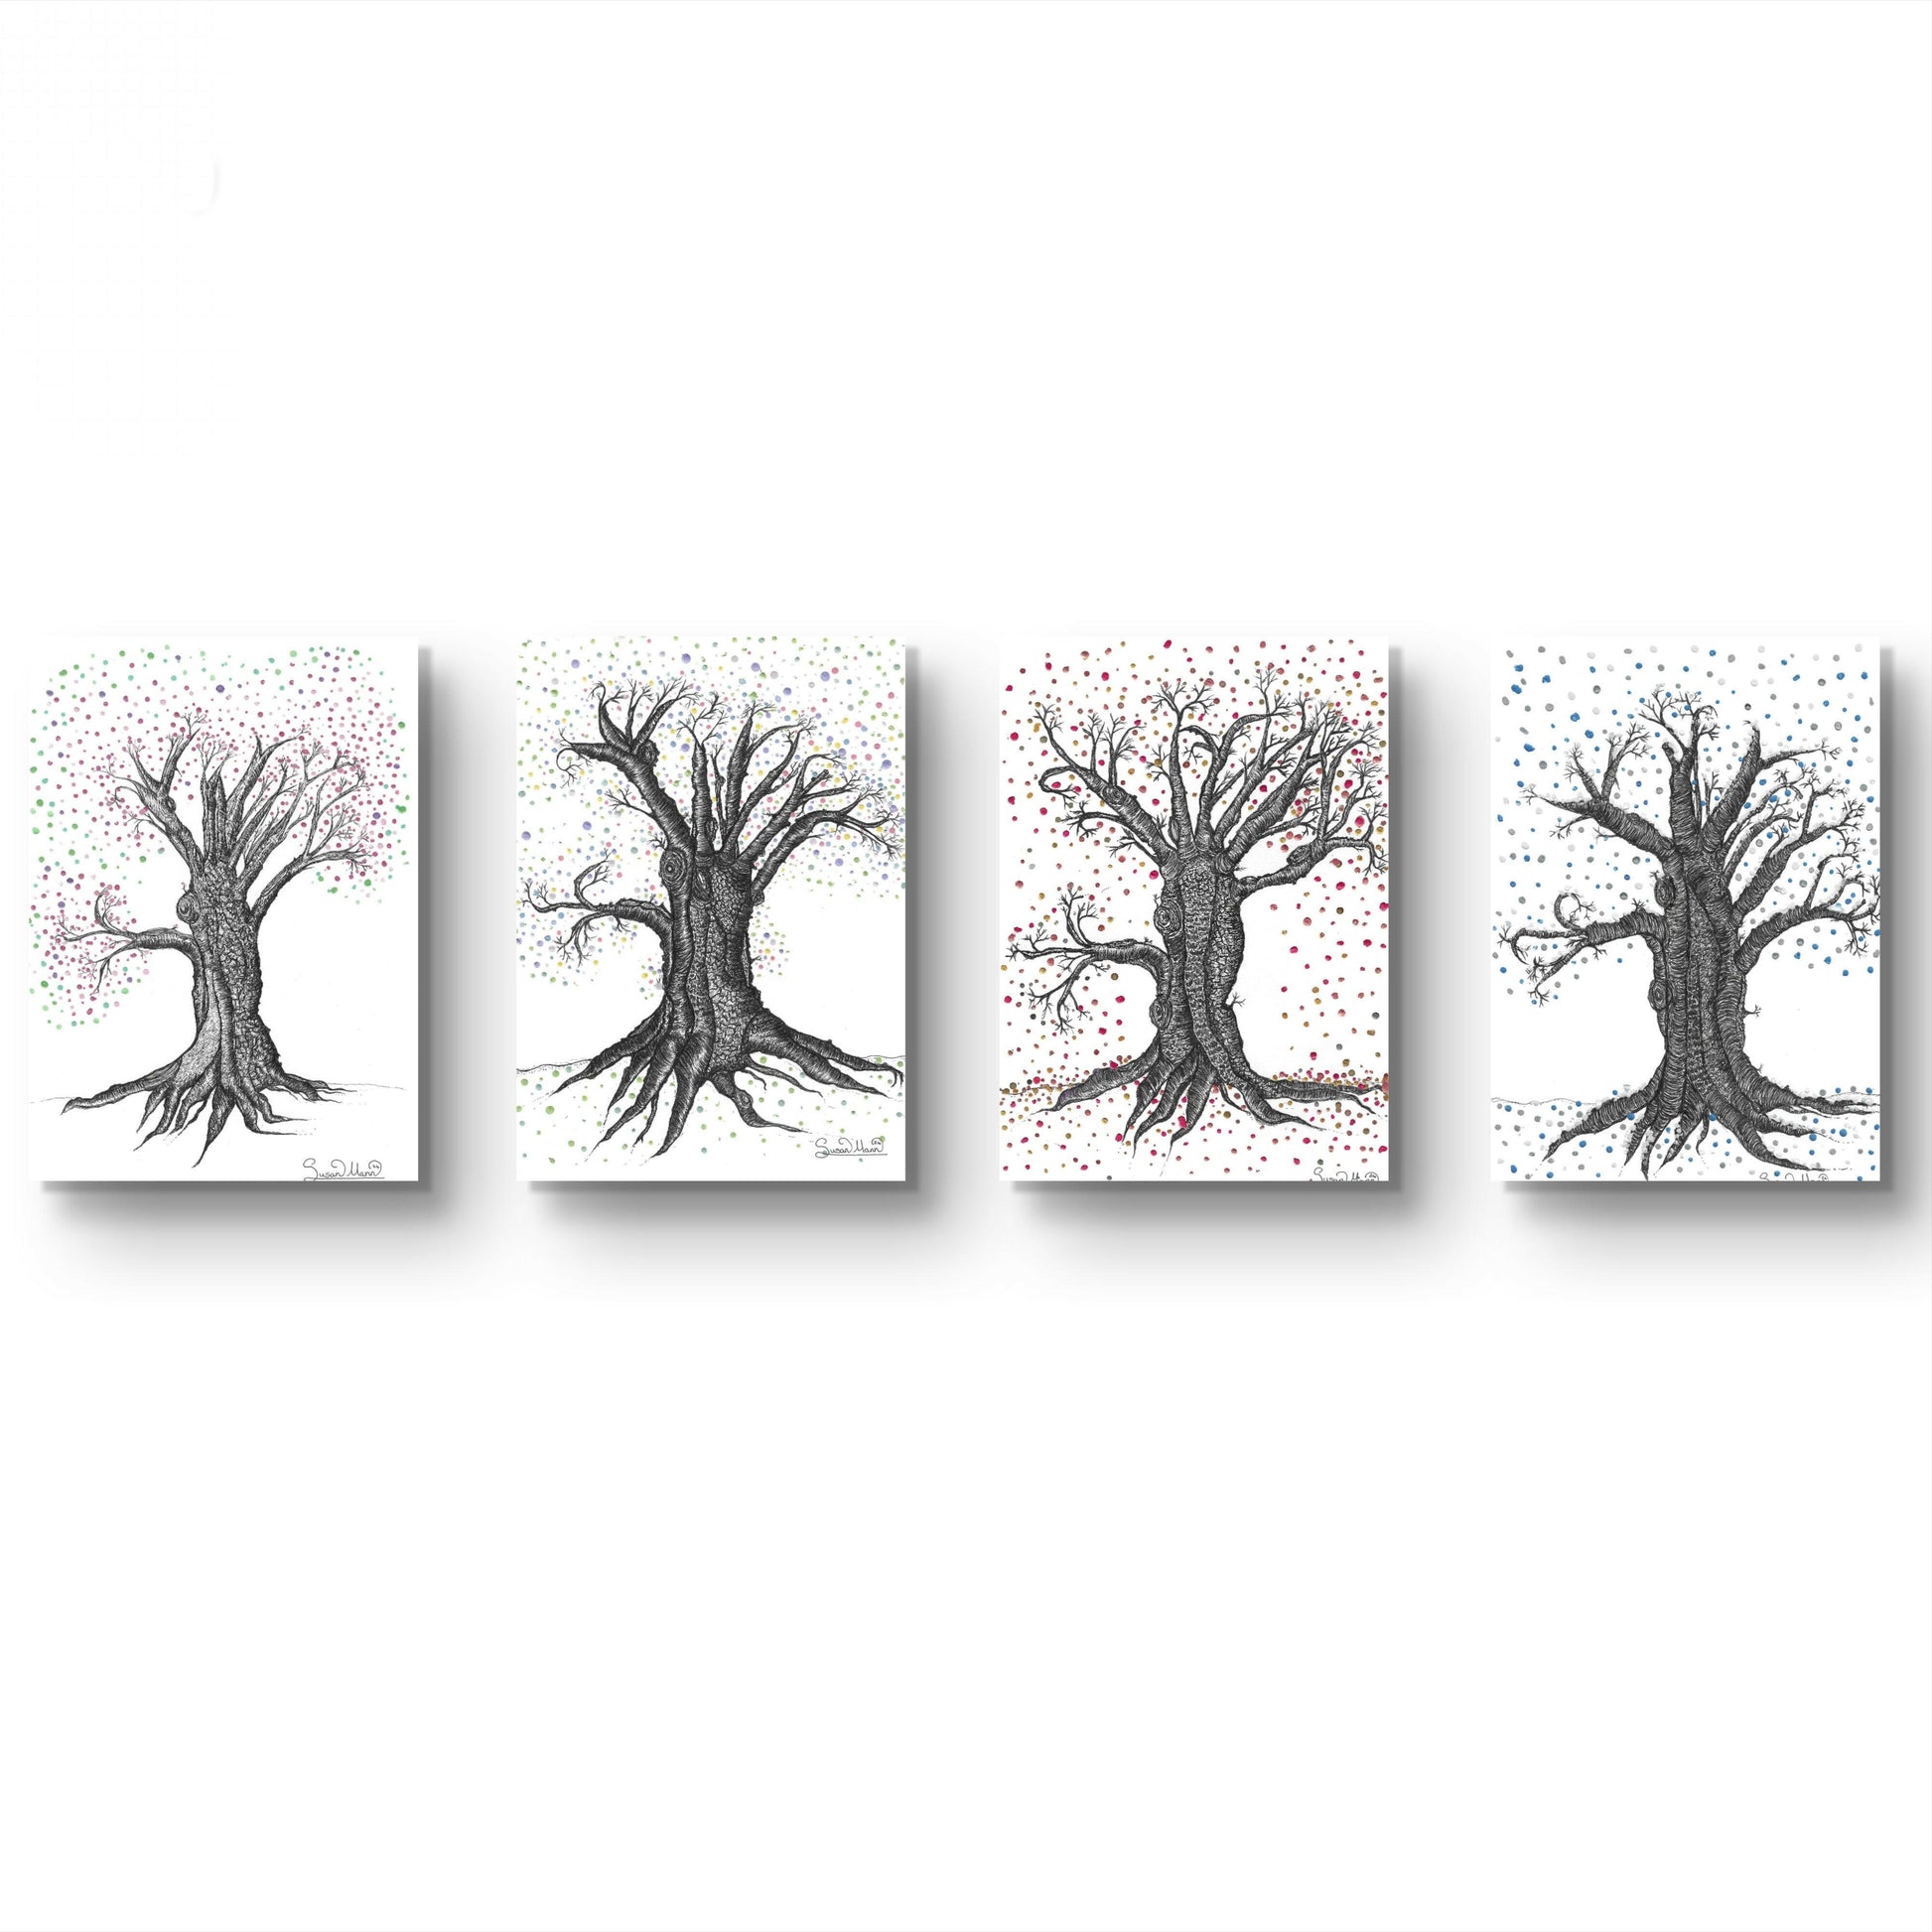 A Tree for all seasons art print wall set